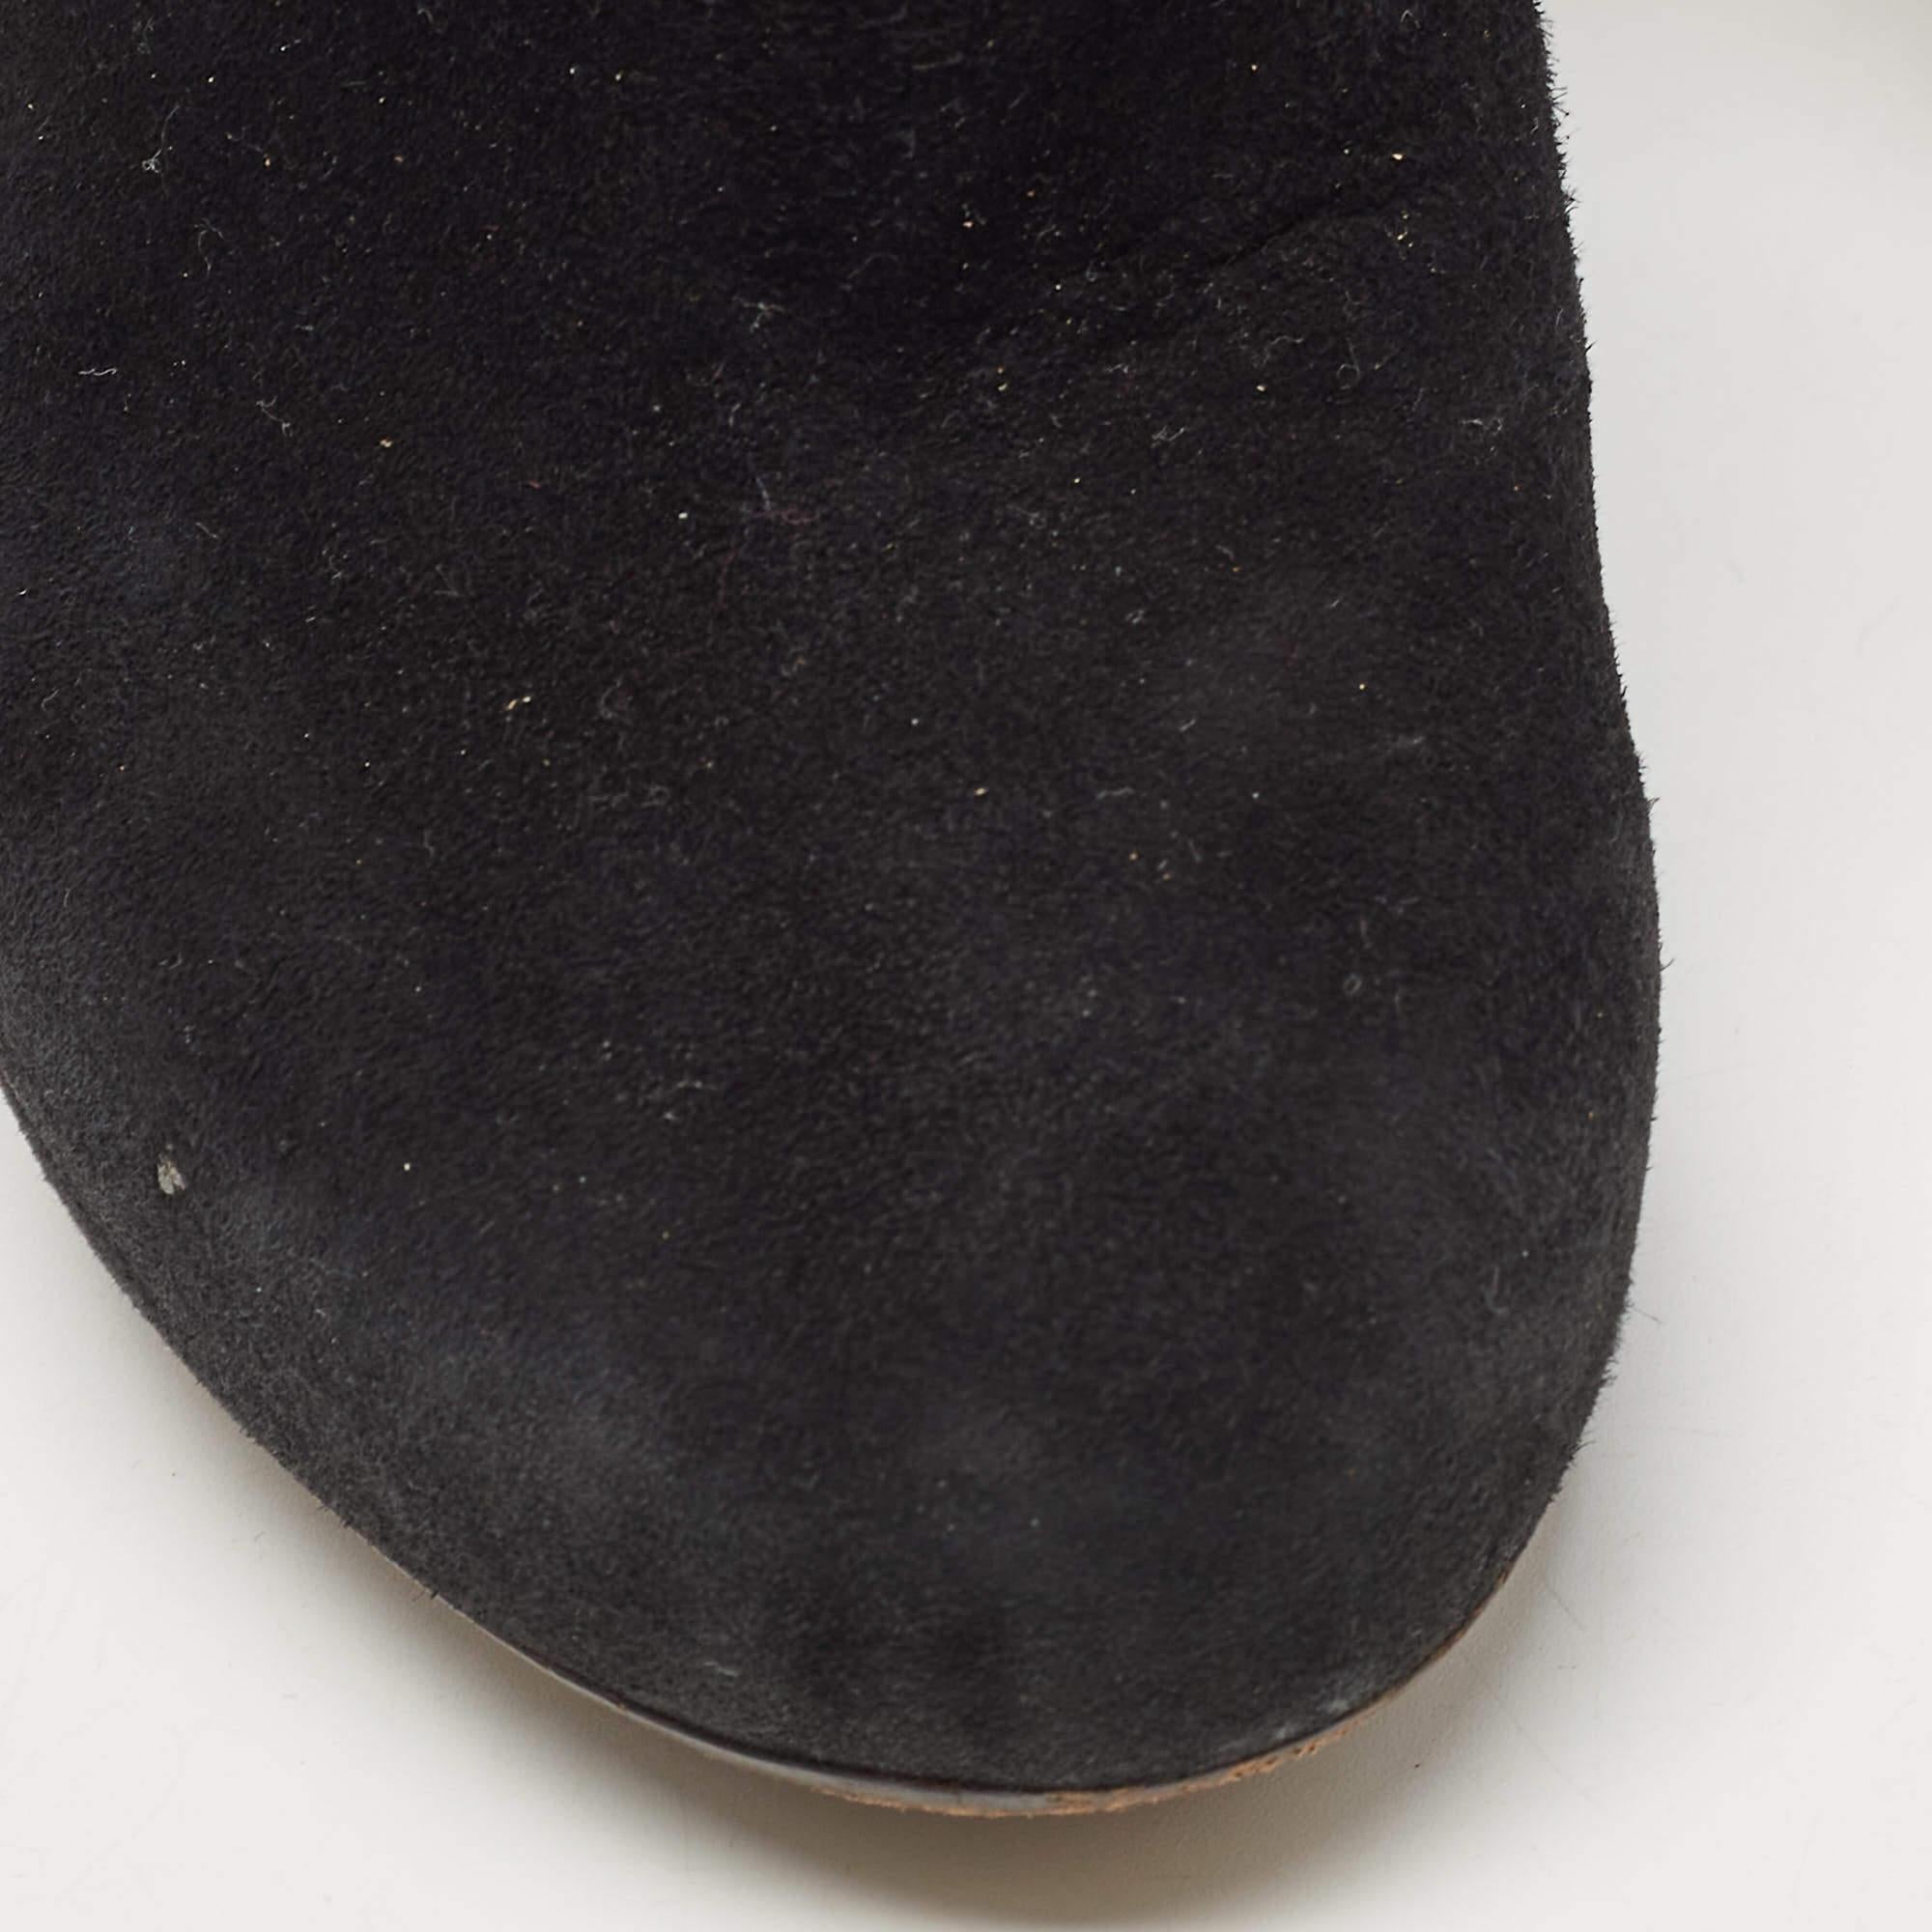 Celine Black Suede Platform Block Heel Ankle Booties Size 37 For Sale 5